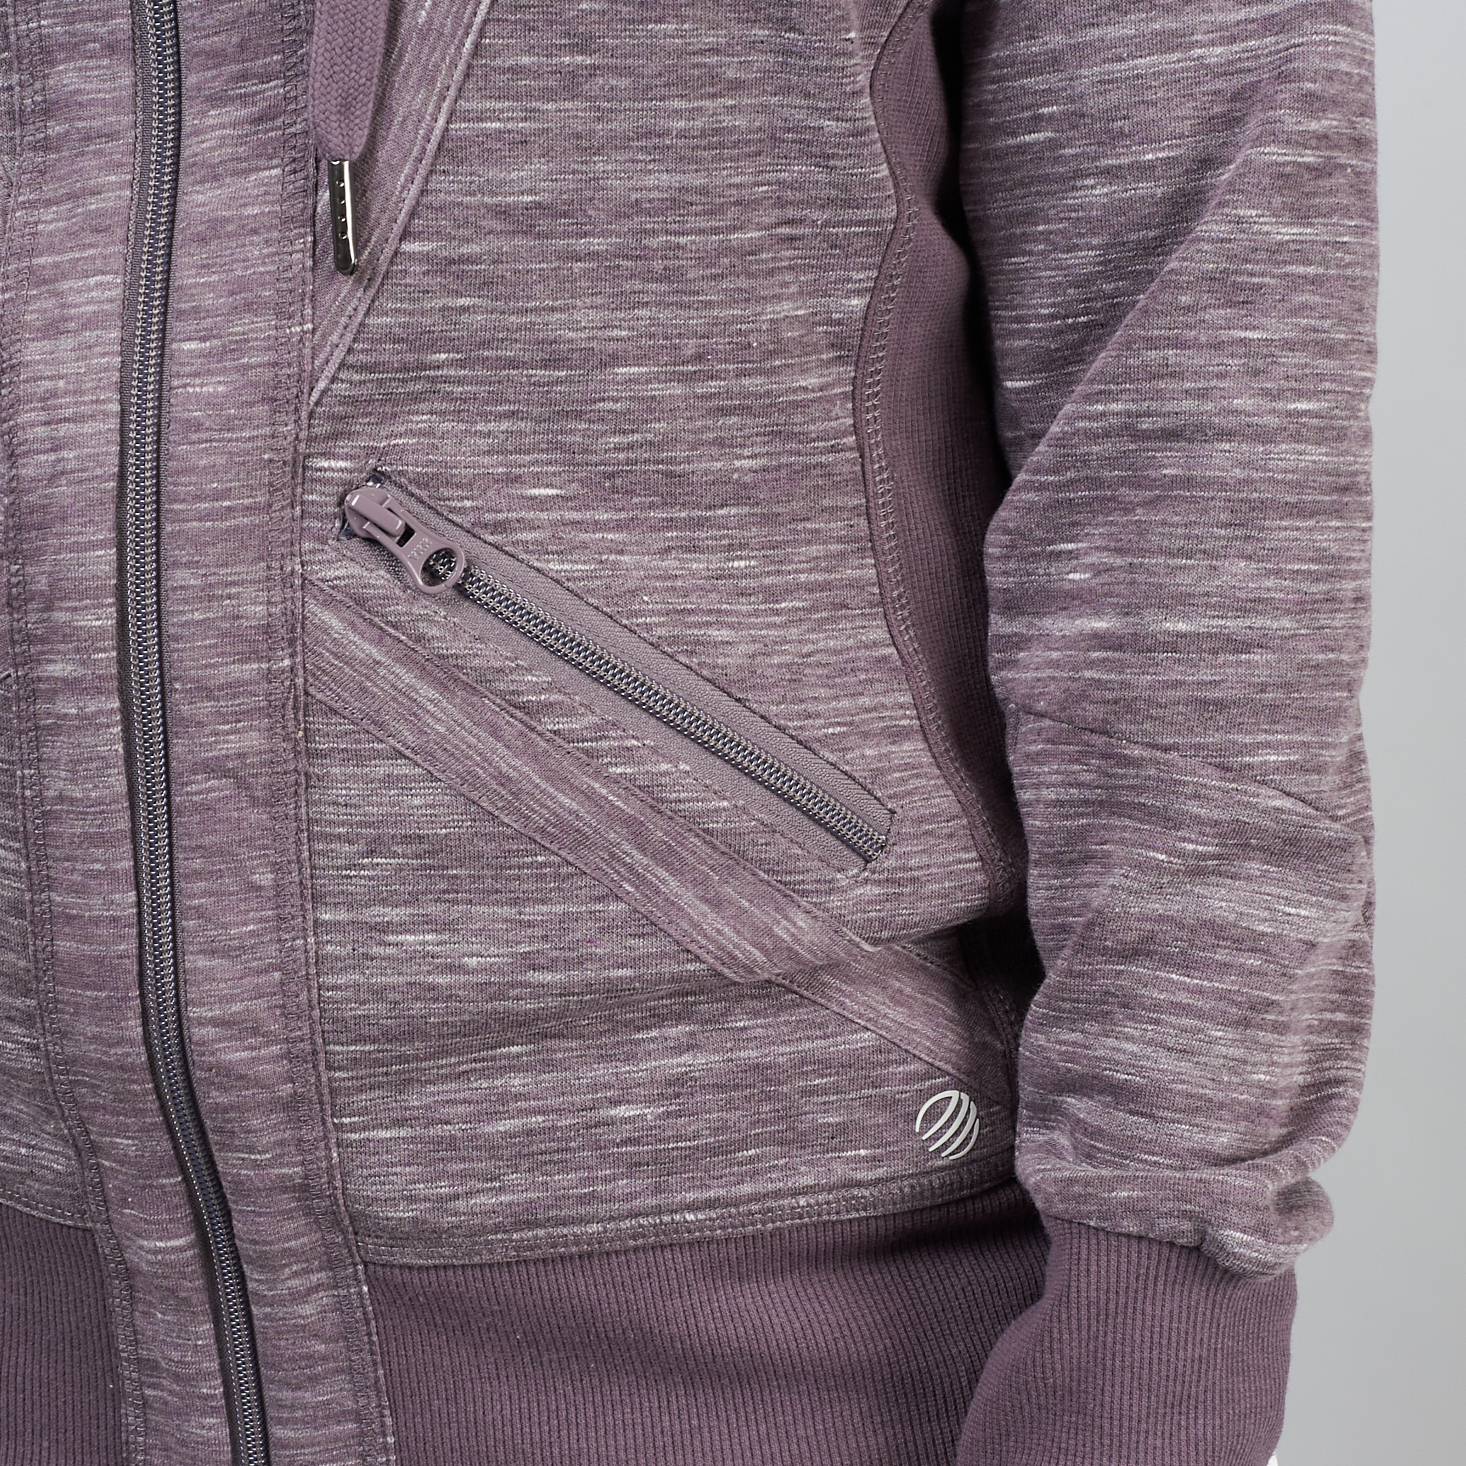 Wantable Fitness Edit February 2020 zipper pocket mpg sport hoodie